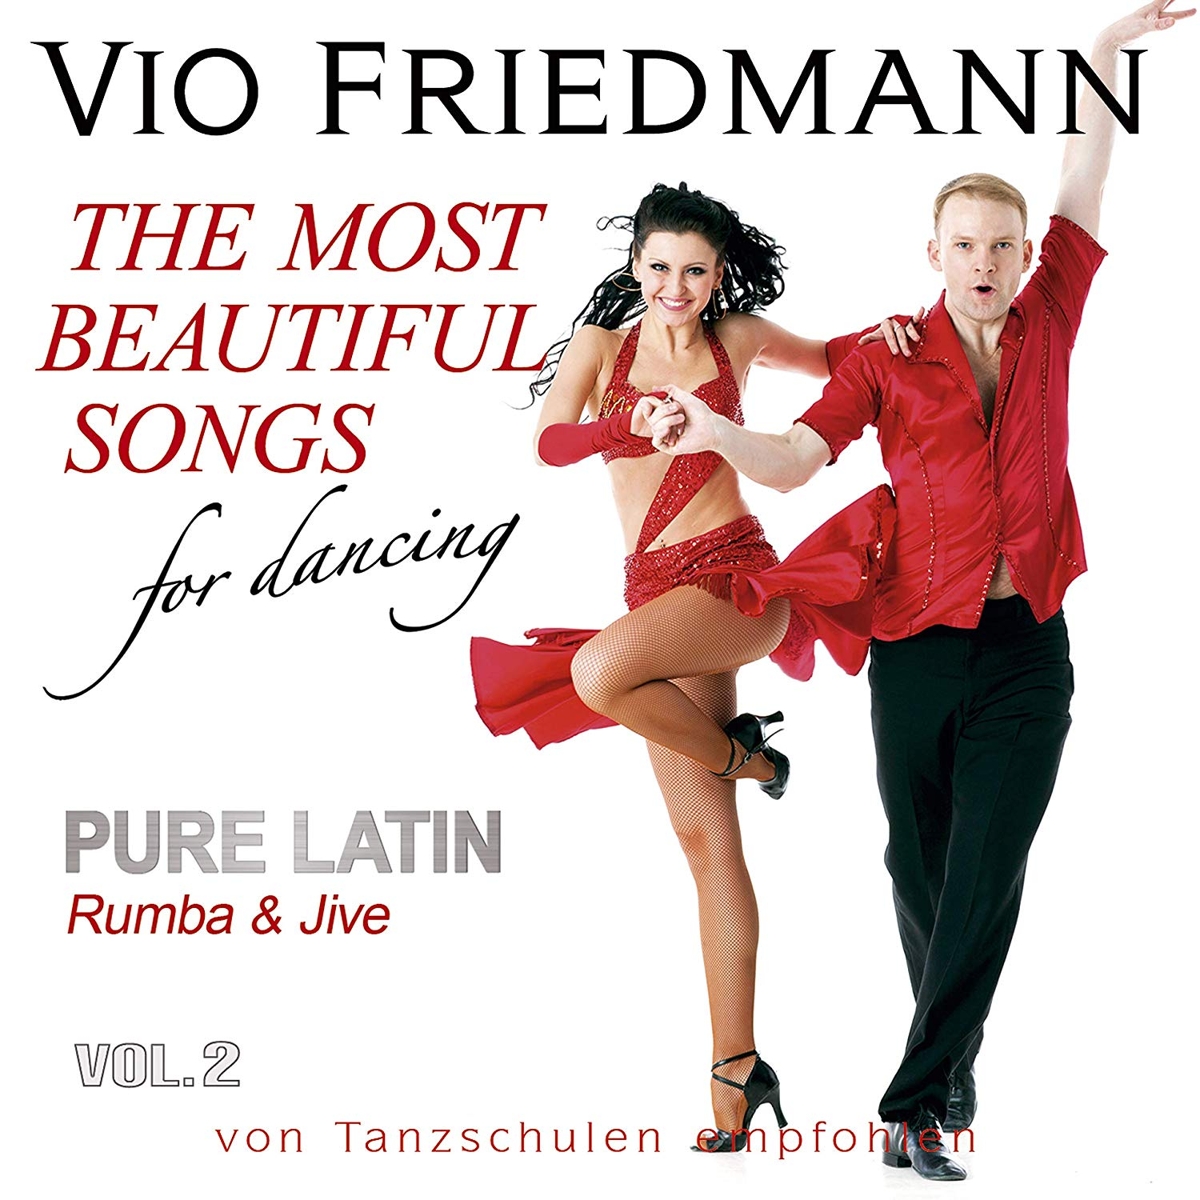 Friedmann, Vio - Pure Latin Vol. 2 (Rumba & Jive) – The Most Beautiful Songs For Dancing 